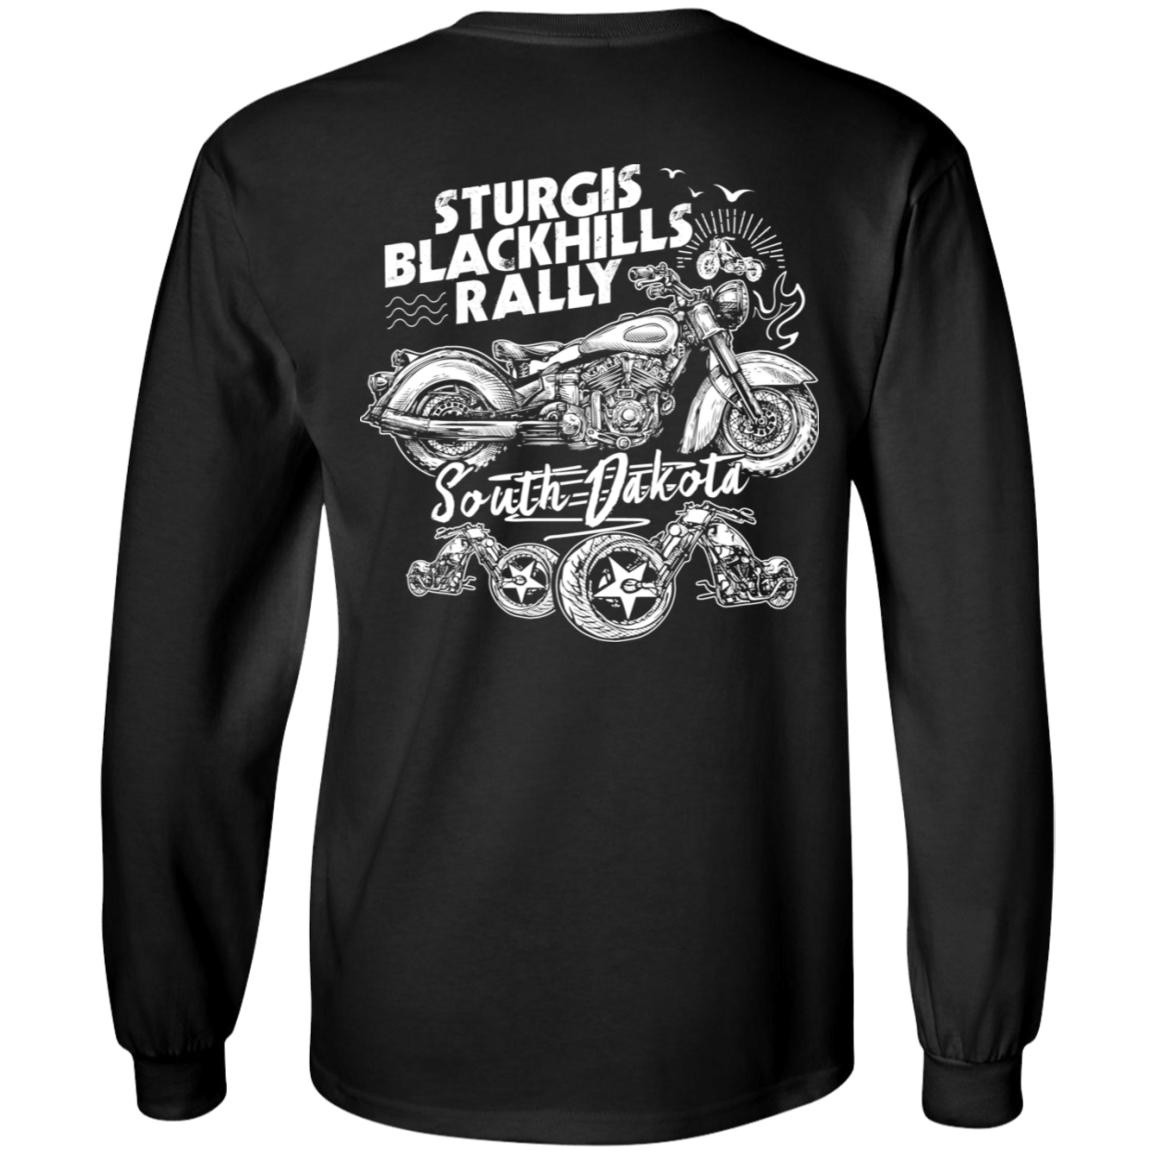 Sturgis Blackhills Rally T-Shirt & Hoodies - American Legend Rider